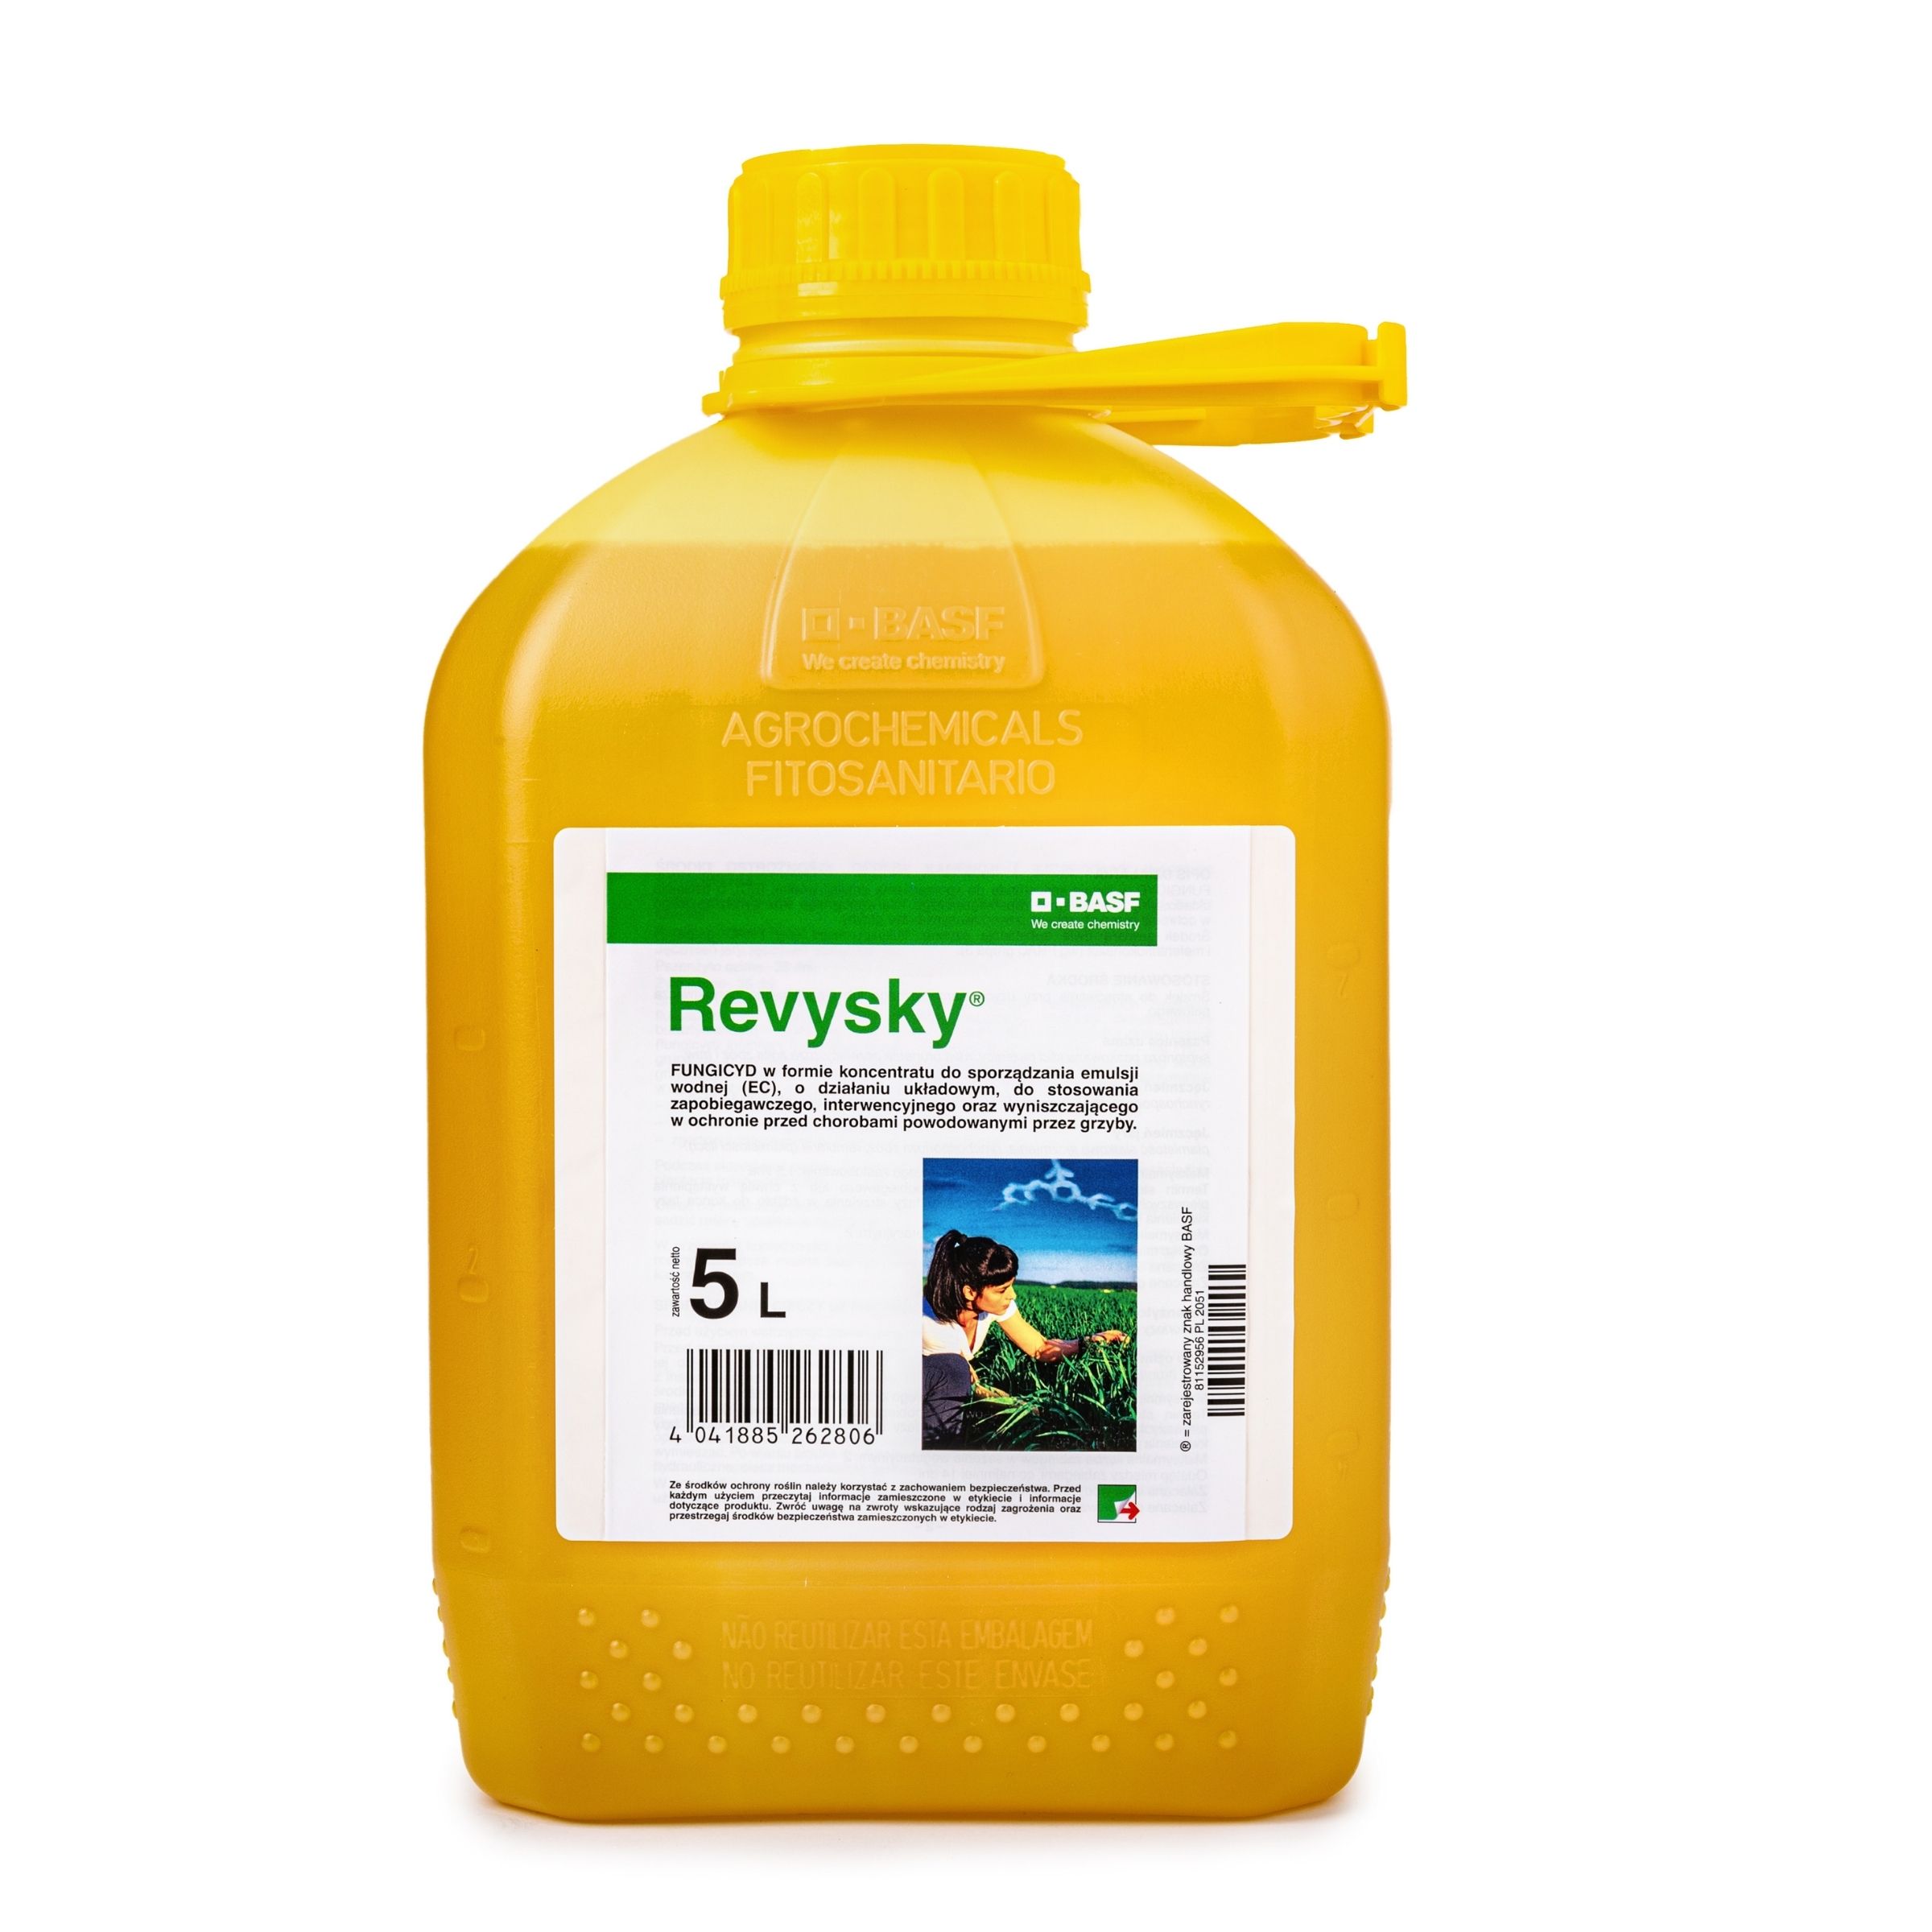 Revysky-5l.jpg